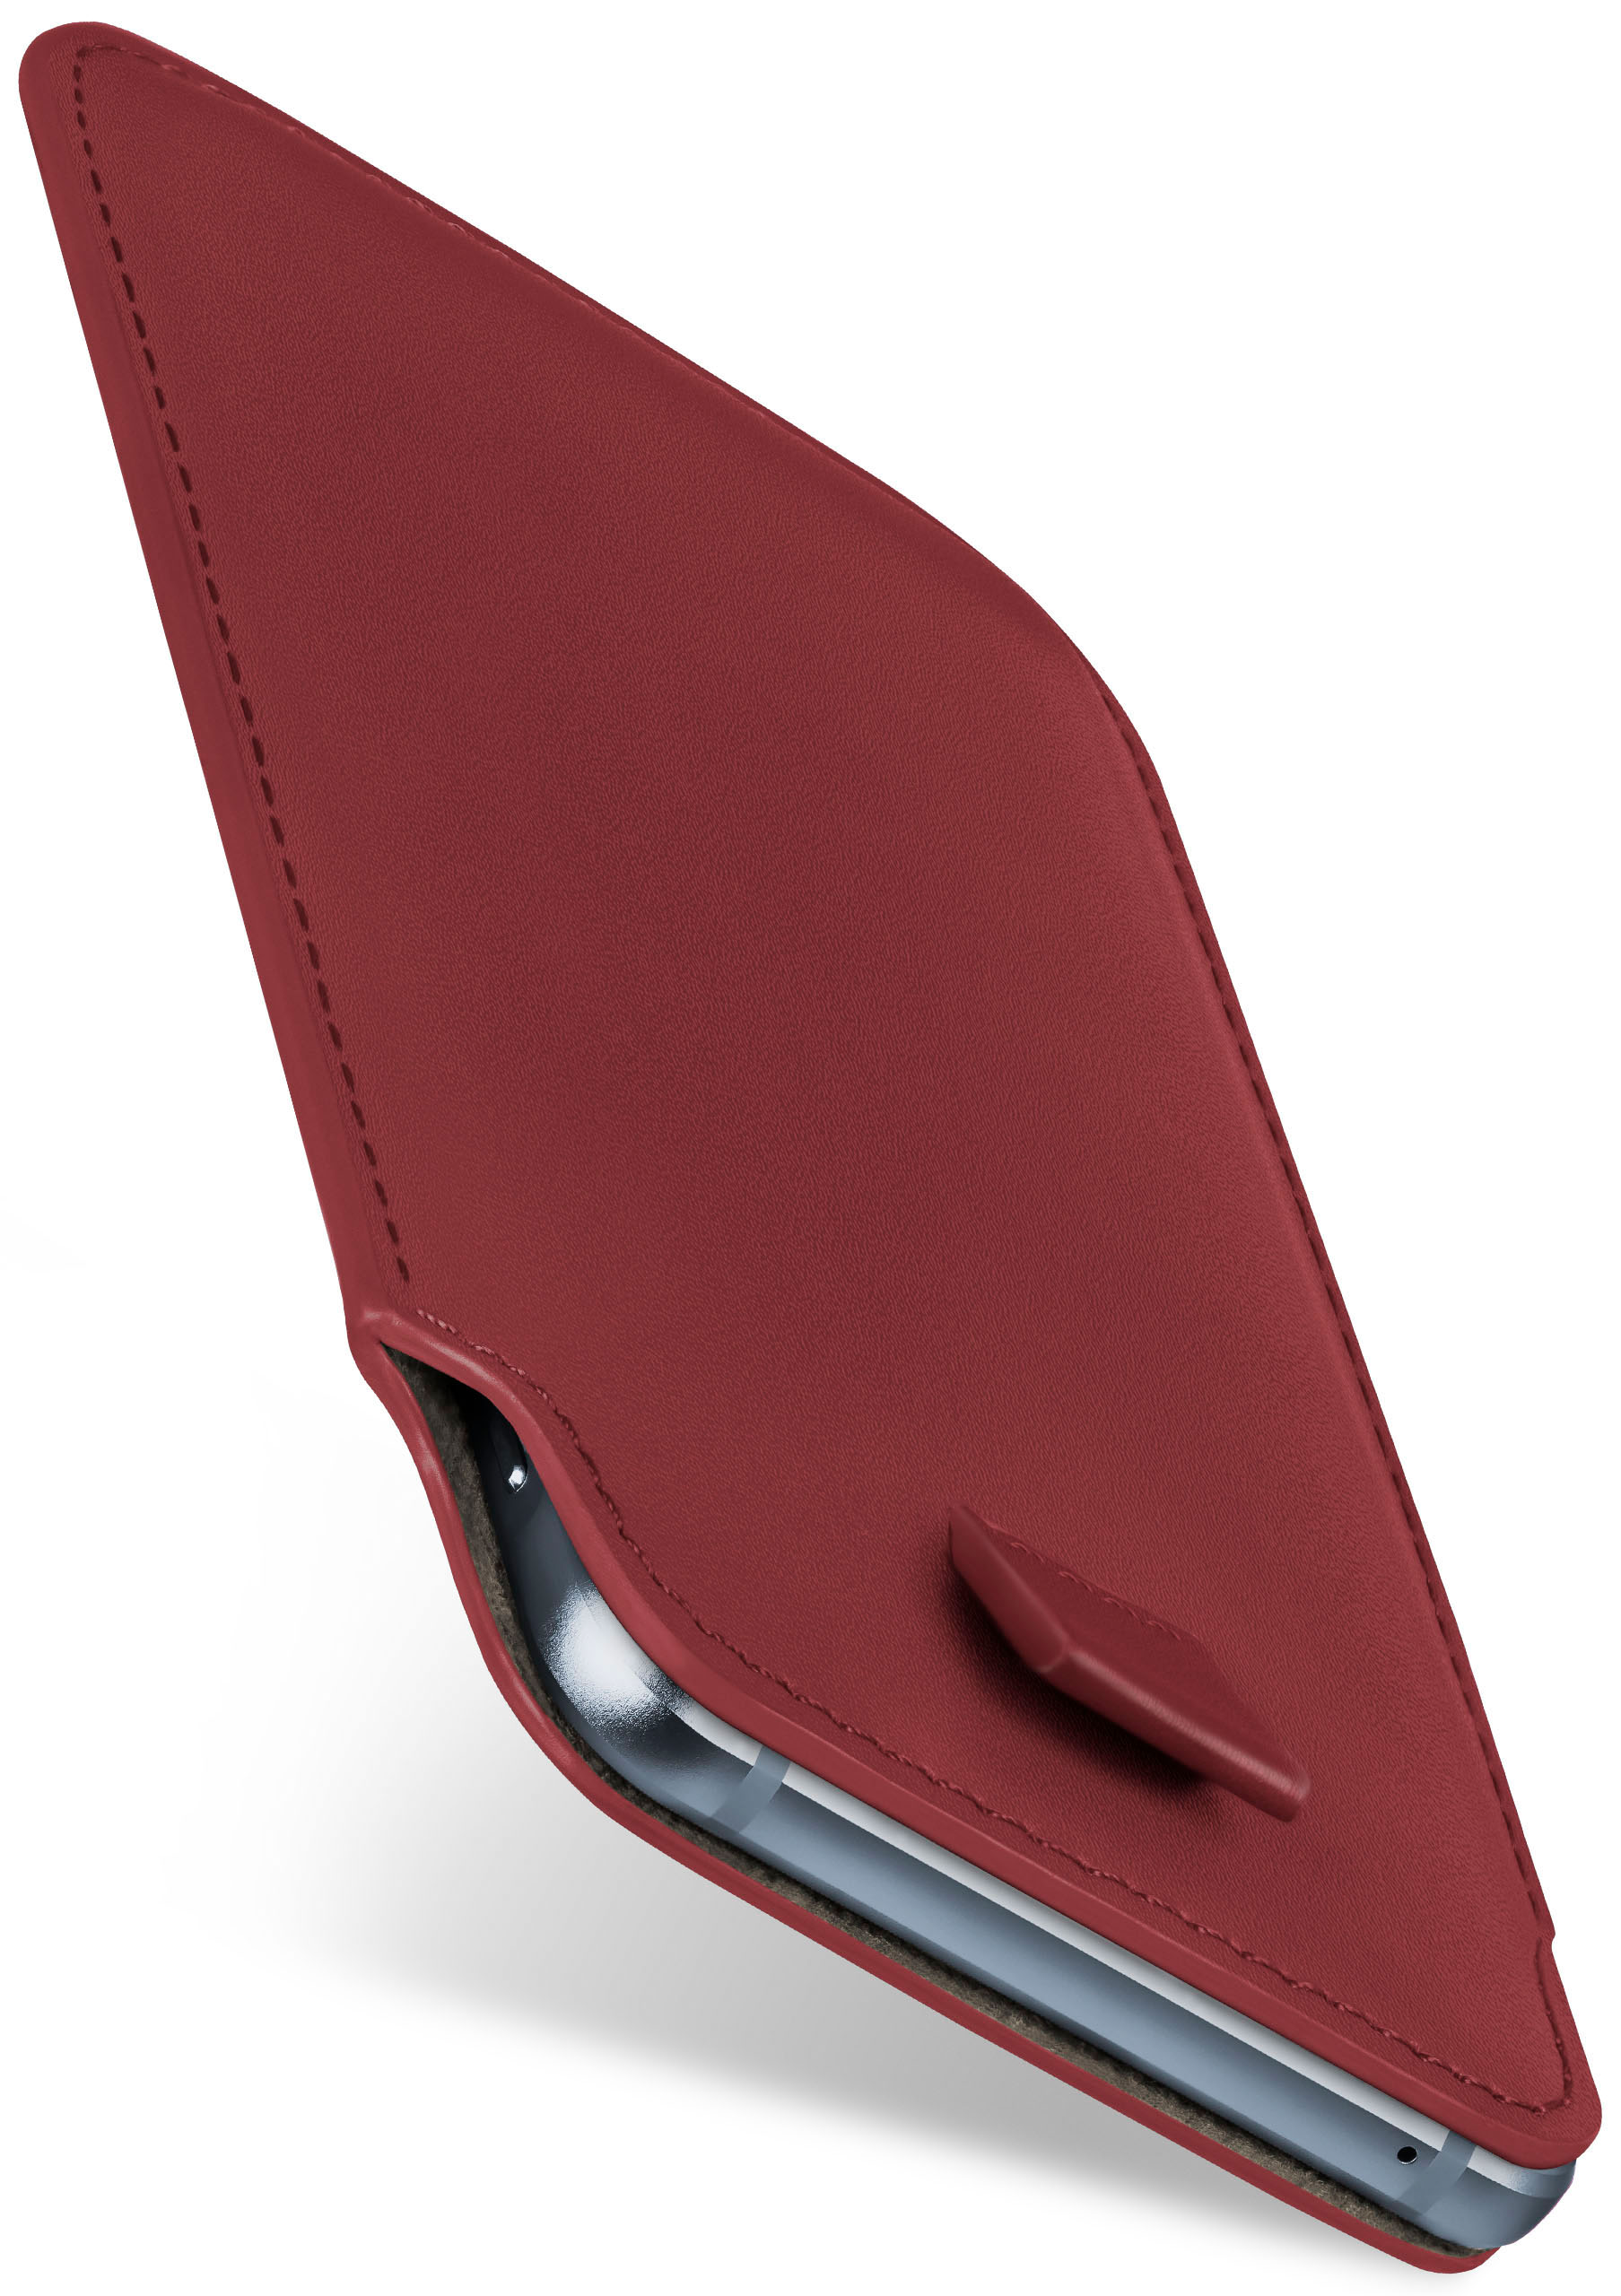 MOEX Slide Case, Plus, LG, Maroon-Red Full Q7 Cover